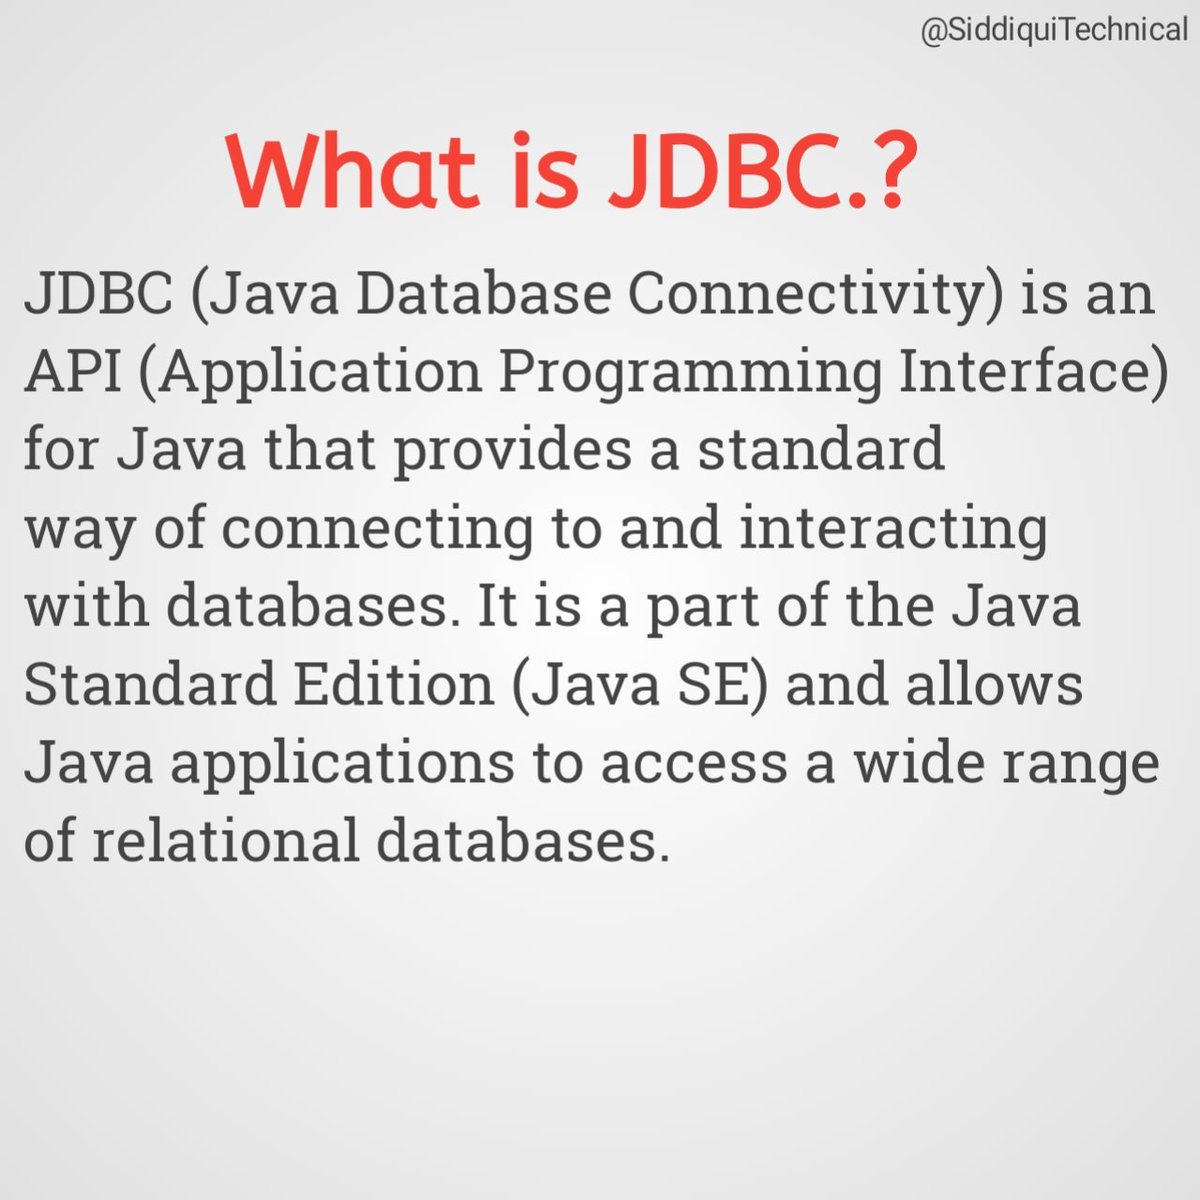 Learn a little bit of JDBC in Java.

#softwaredeveloper #softwareengineering #siddiquitechnical #javaframework #javaobjectoriented #javatutorial #javainterview
#javamethods
#javafunctionality
#javaindustry
#javawork
#javacareer
#javajobs
#javainterview
#javaquestions
#javaquiz